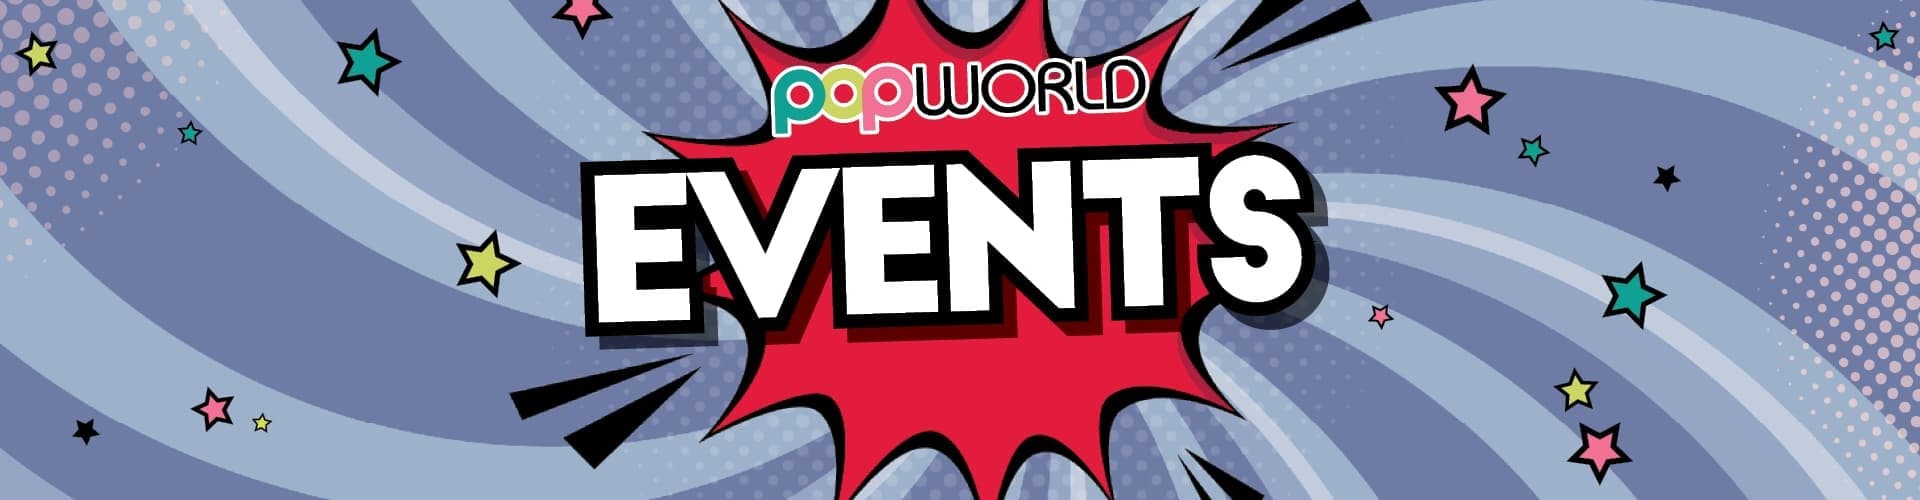 Events at Popworld Leeds